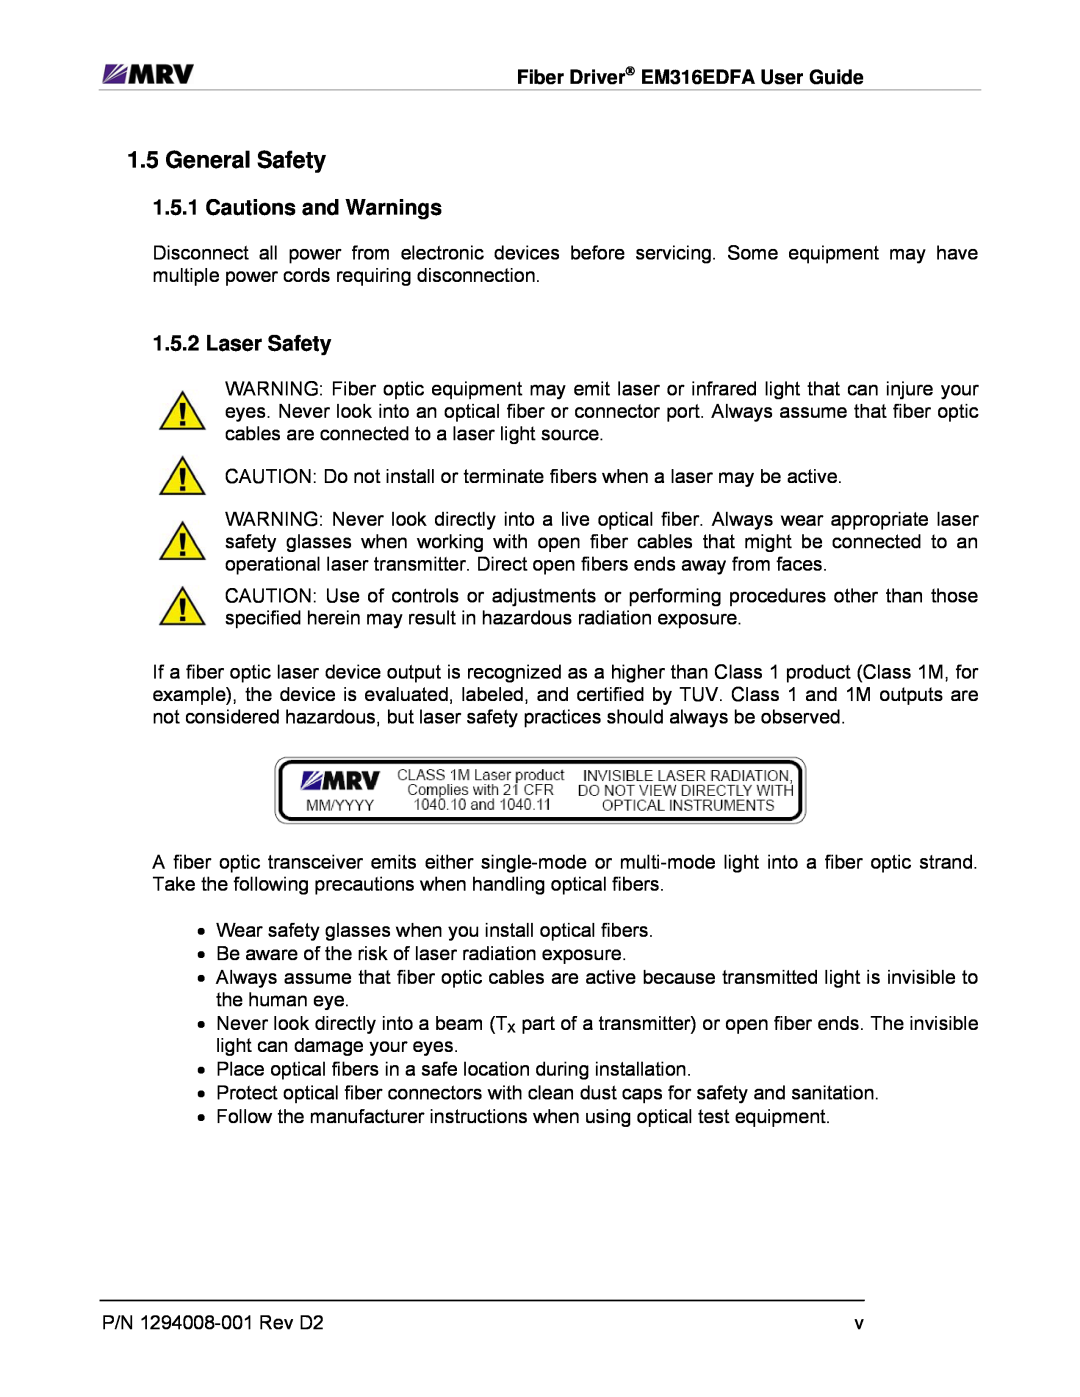 MRV Communications EM316EDFA-BR, EM316EDFA-LPR manual 1.5General Safety, 1.5.1Cautions and Warnings, Laser Safety 